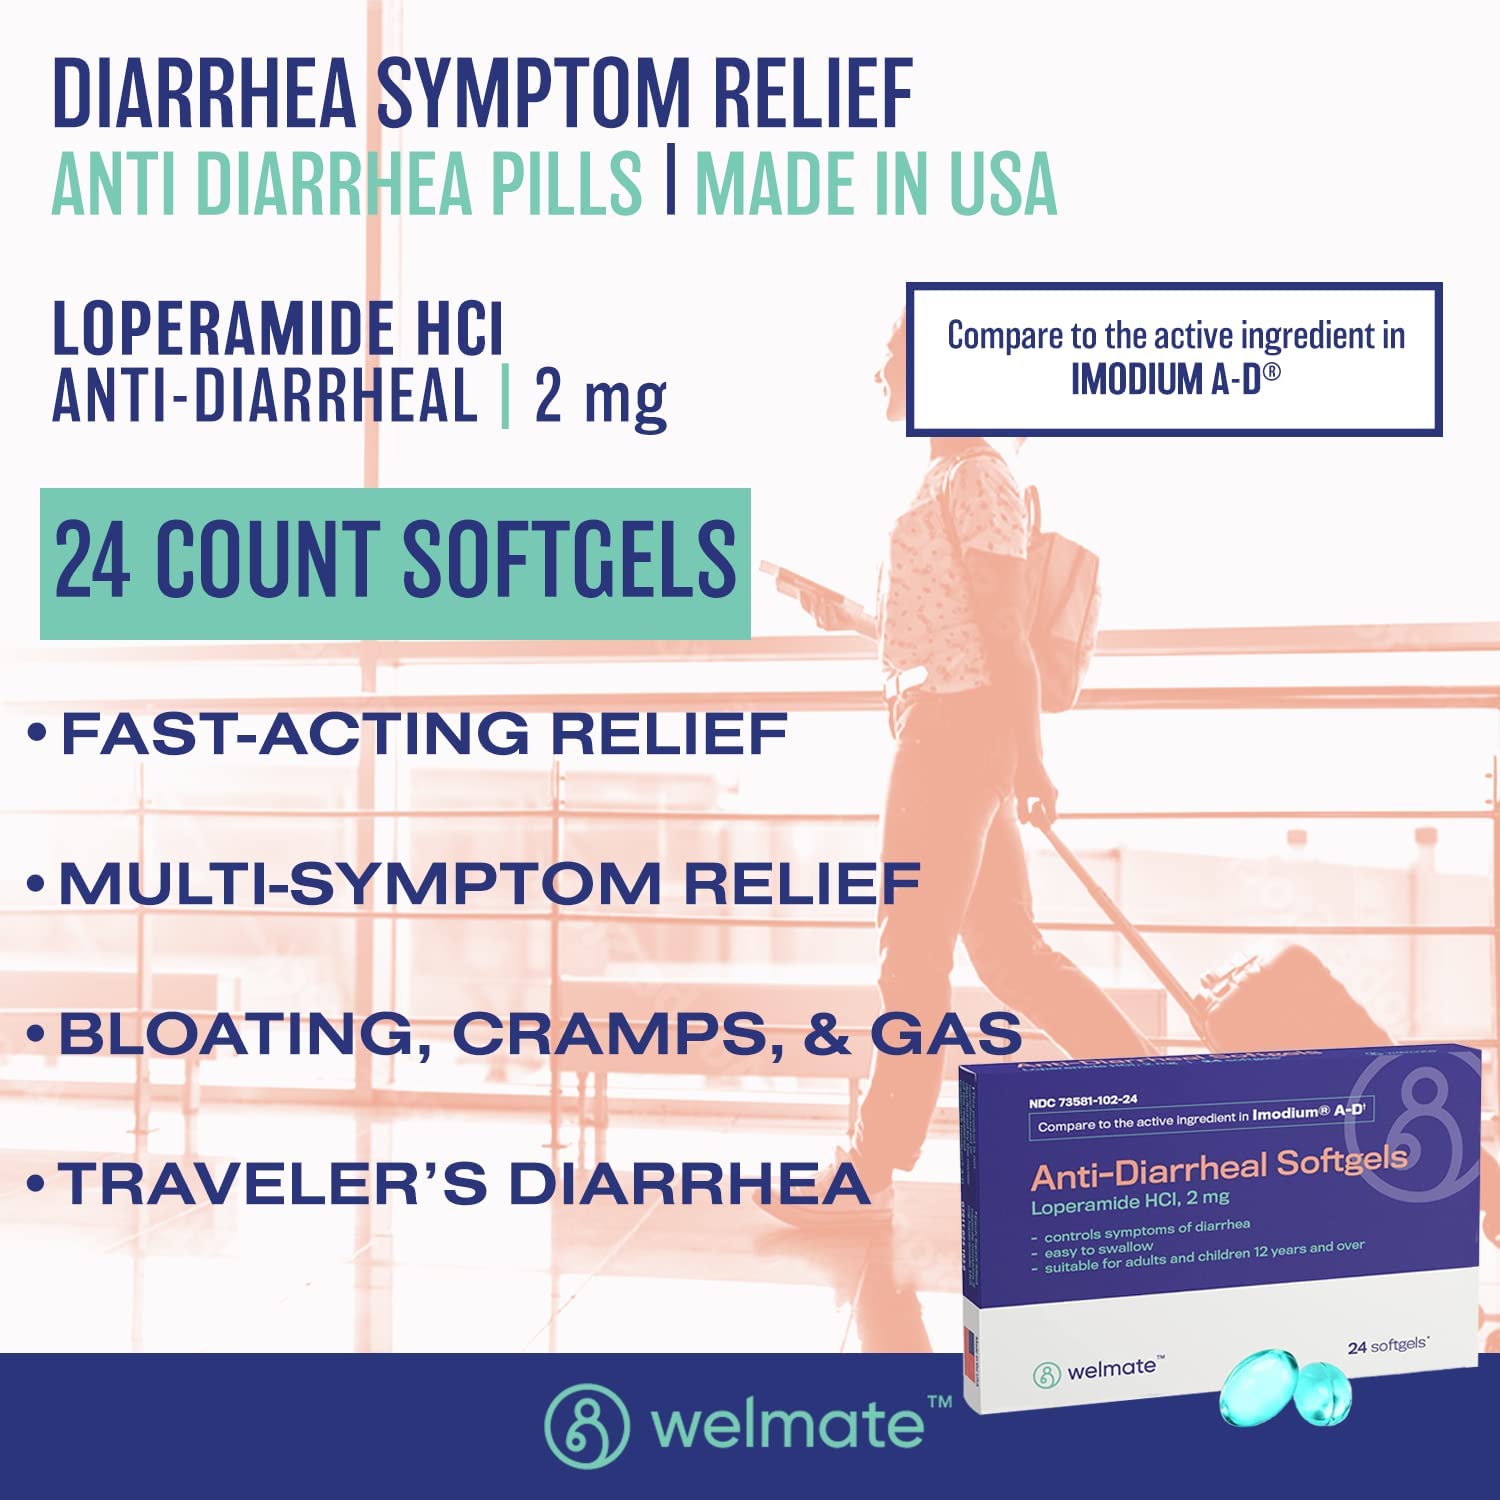 Welmate Anti-Diarrheal Sotfgels - Loperamide HCL 2 mg - Diarrhea Relief - 24 Count Blister Pack - image 2 of 6